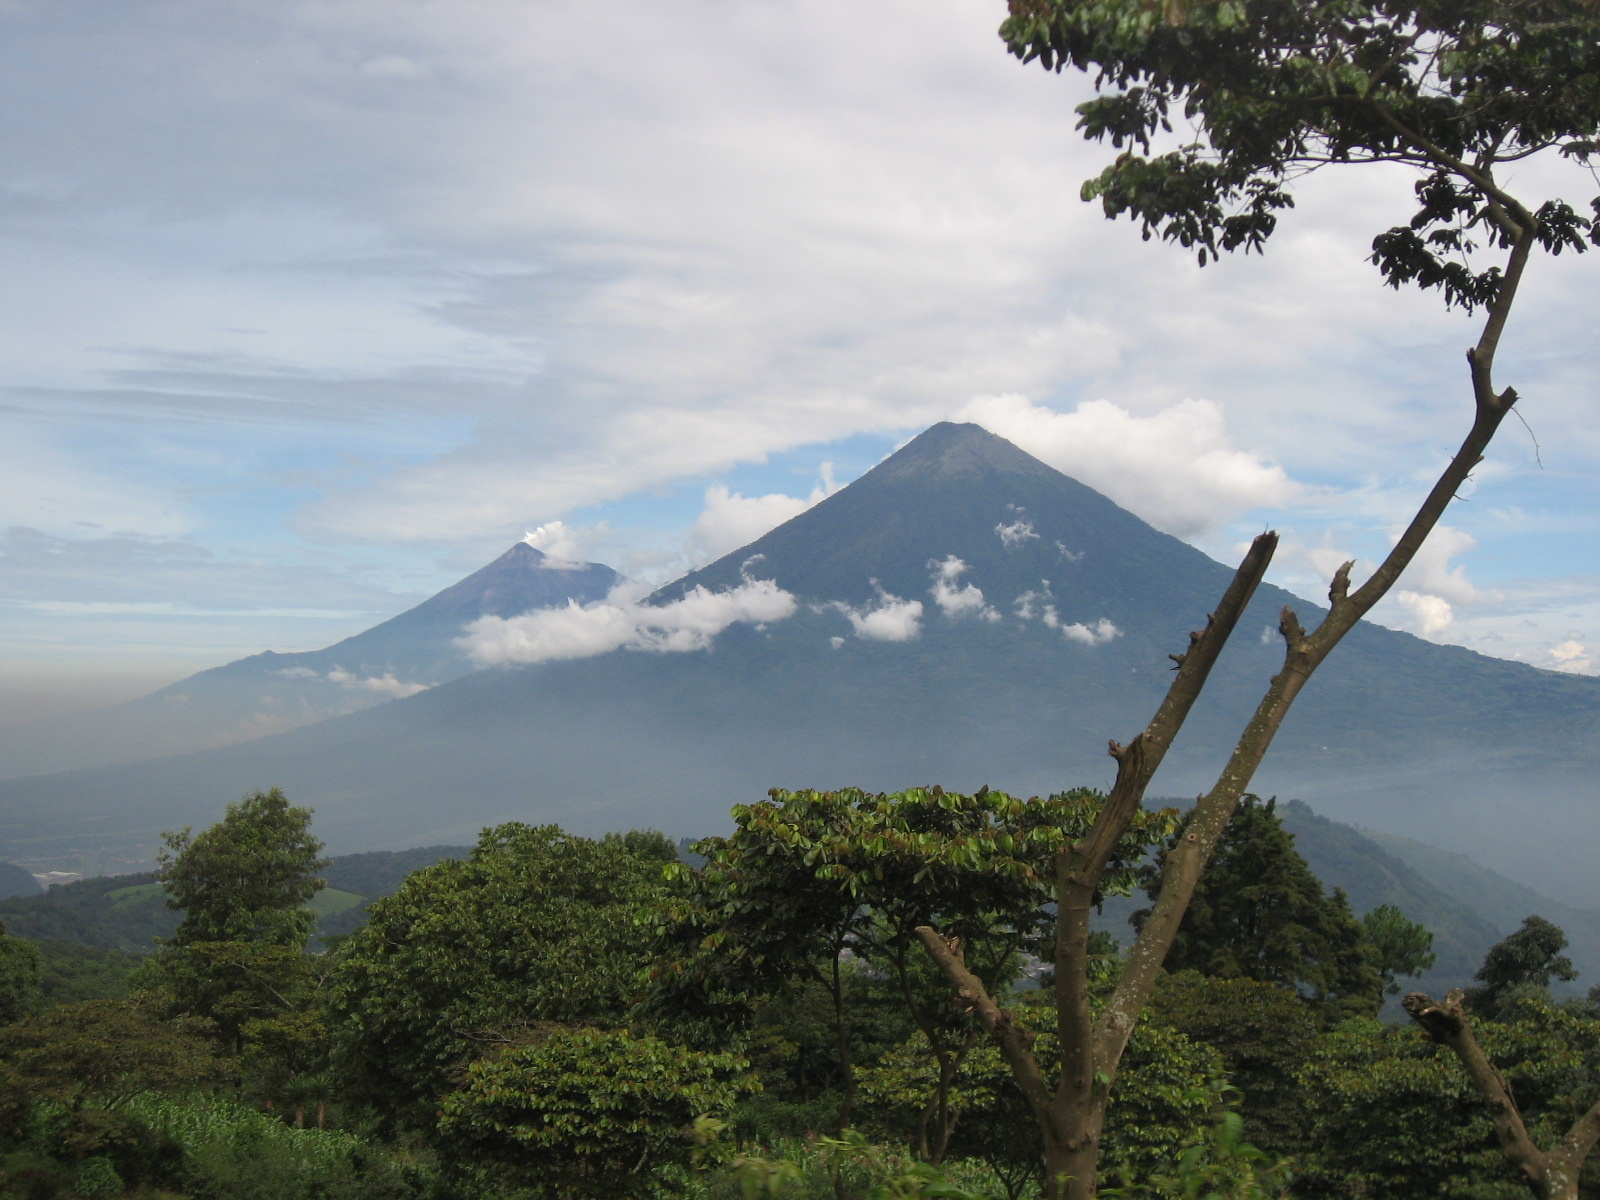 Six dead at Acatenango volcano, The Acatenango and Fuego volcanoes in Guatemala death at Acatenango volcano, Acatenango volcano hikers dead